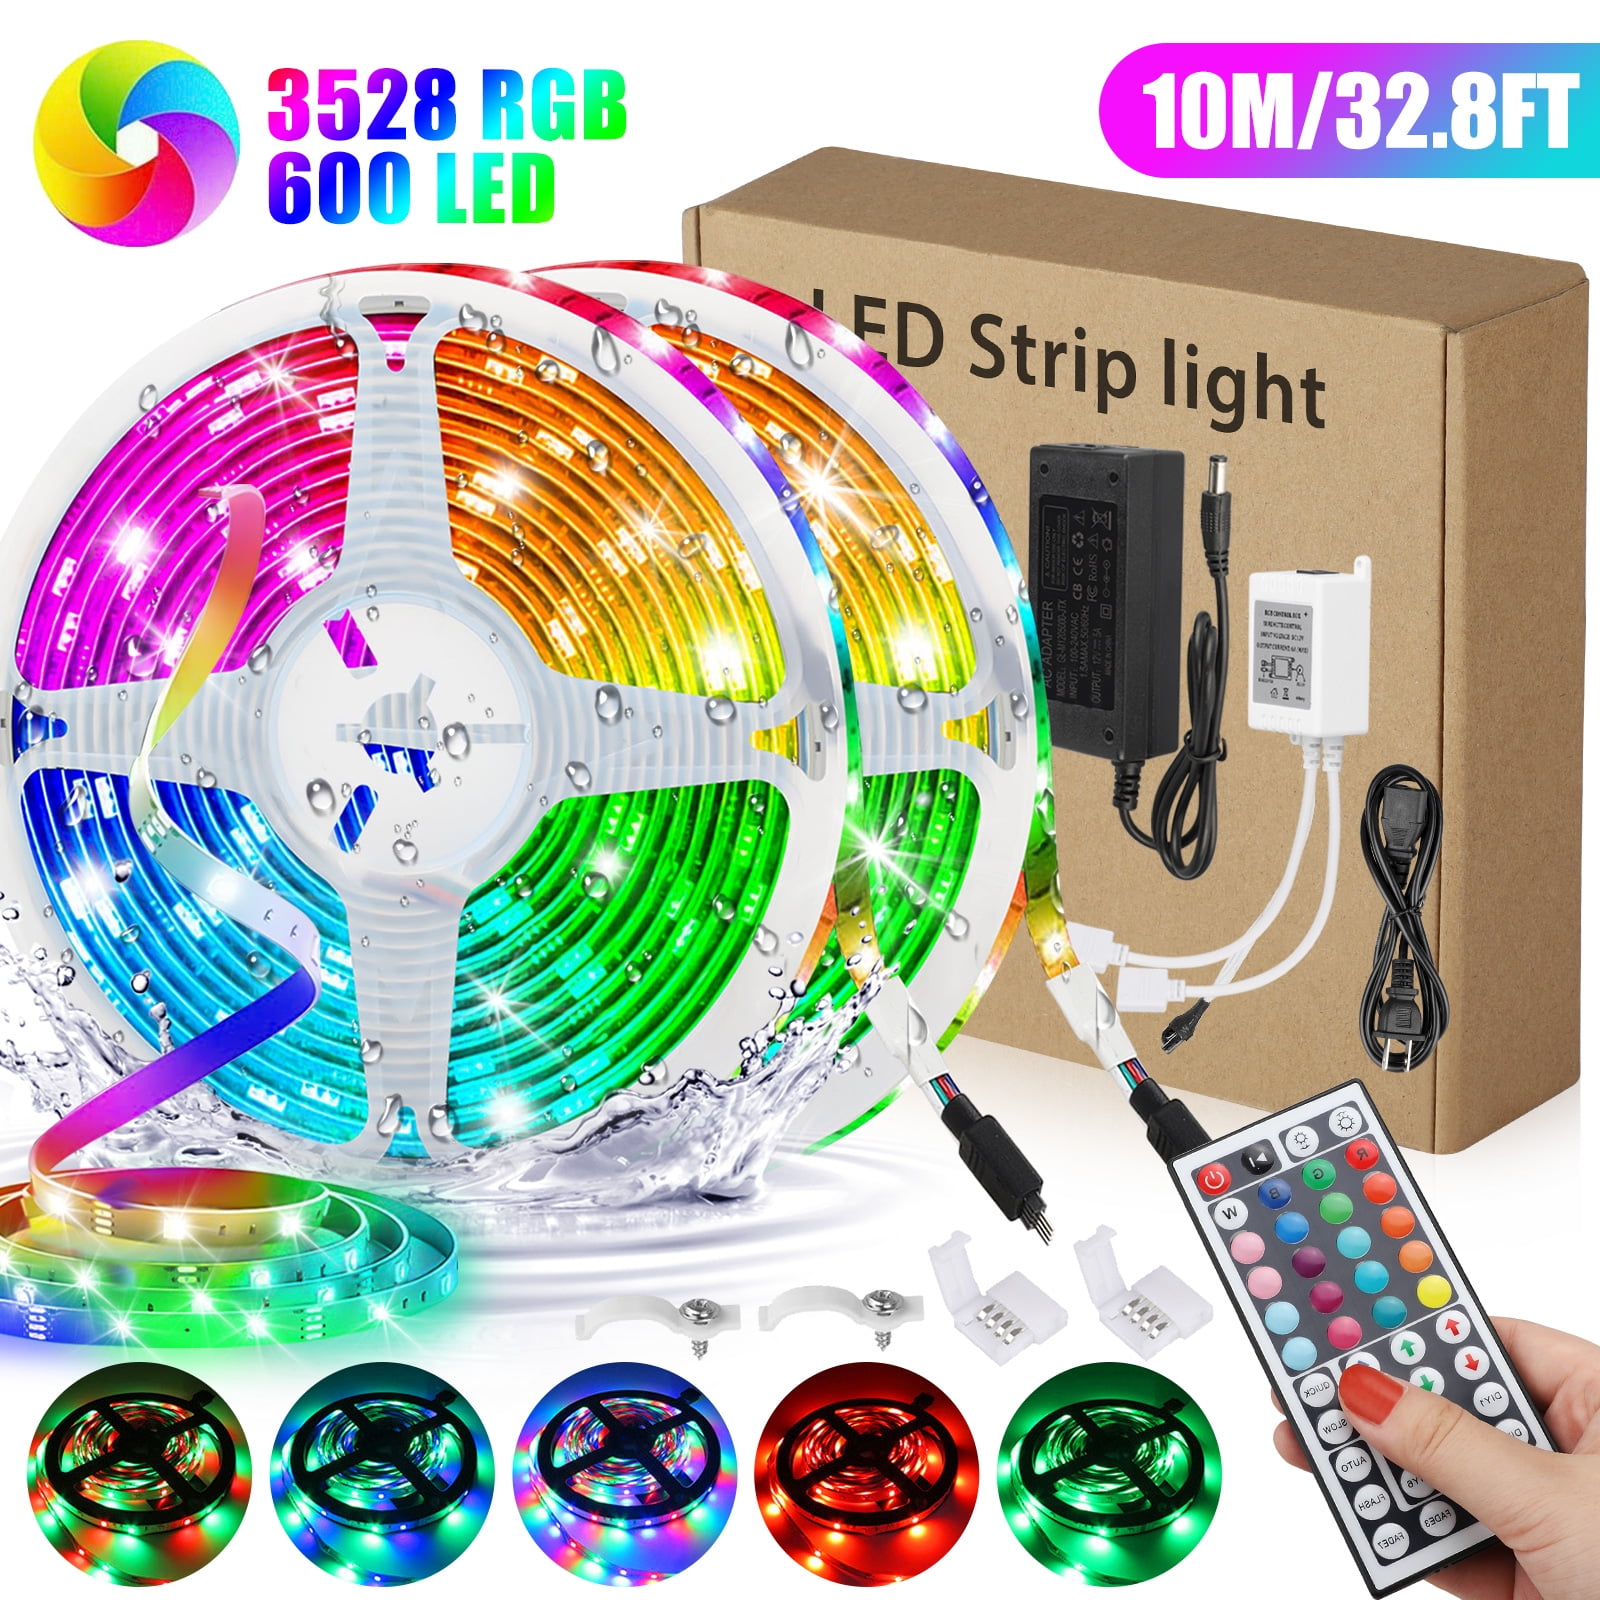 Details about   600LEDs Strip Light 5050 SMD Flexible LED Lamp Tape RGB Lights 12V DC Power Kit 